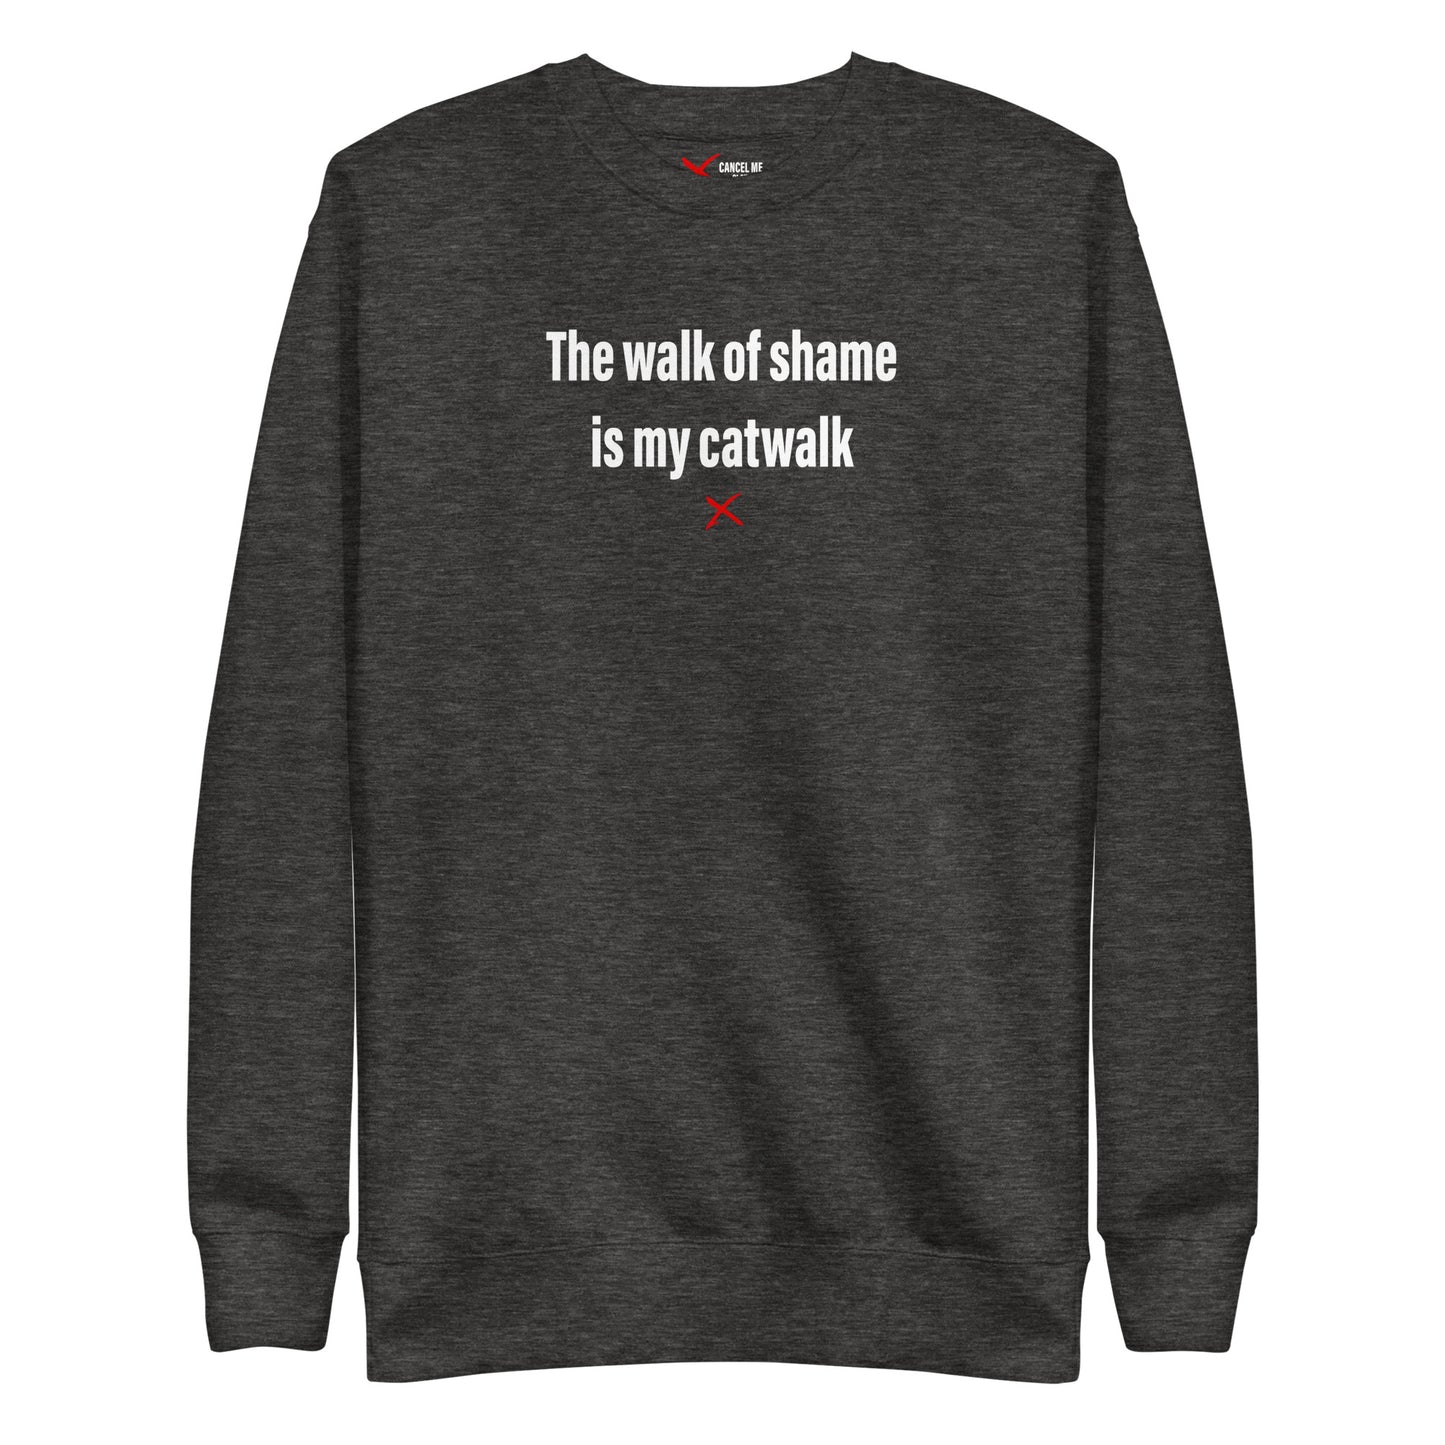 The walk of shame is my catwalk - Sweatshirt